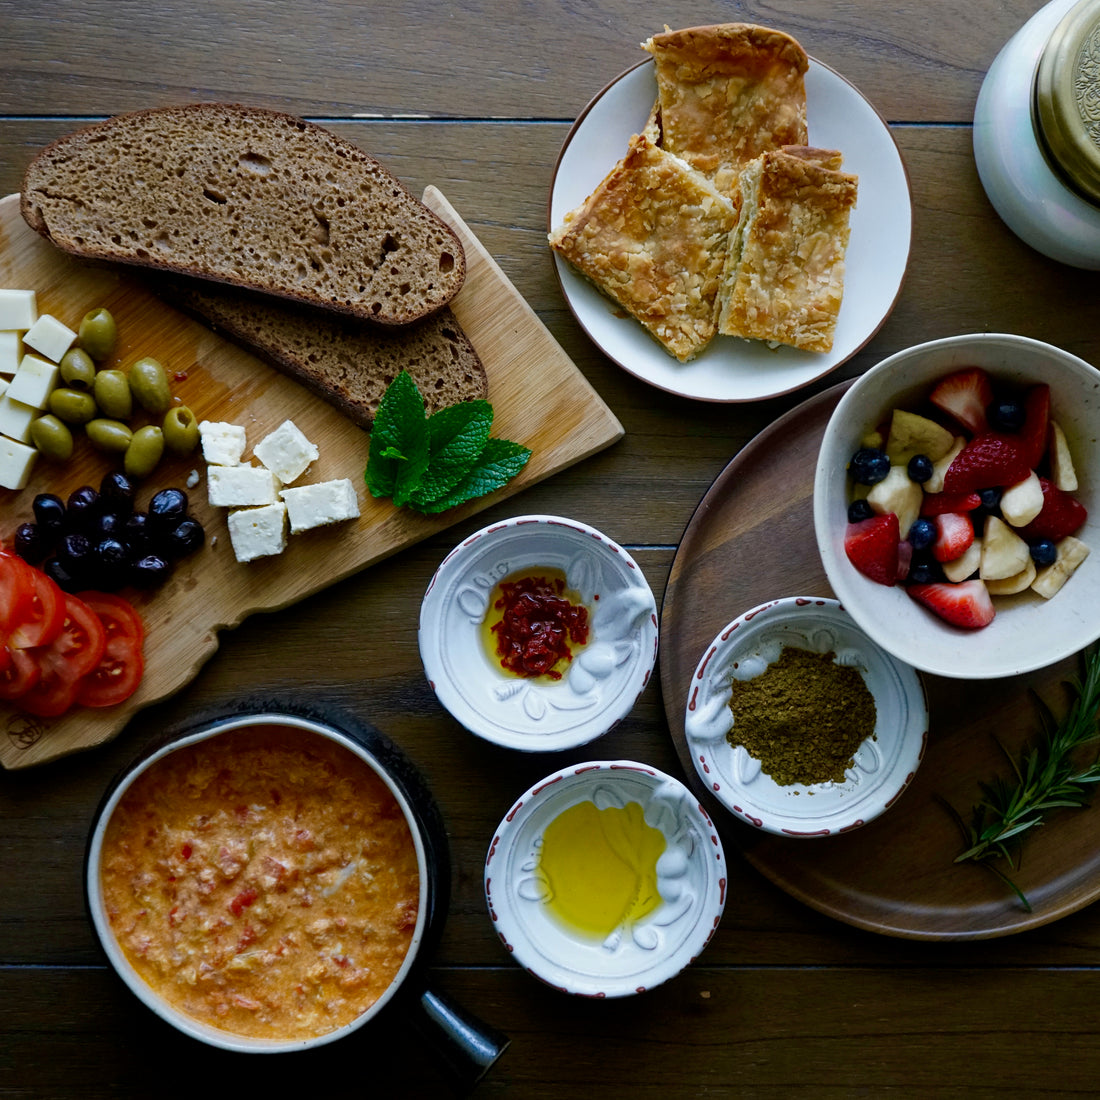 Turkish Breakfast/Brunch for Two